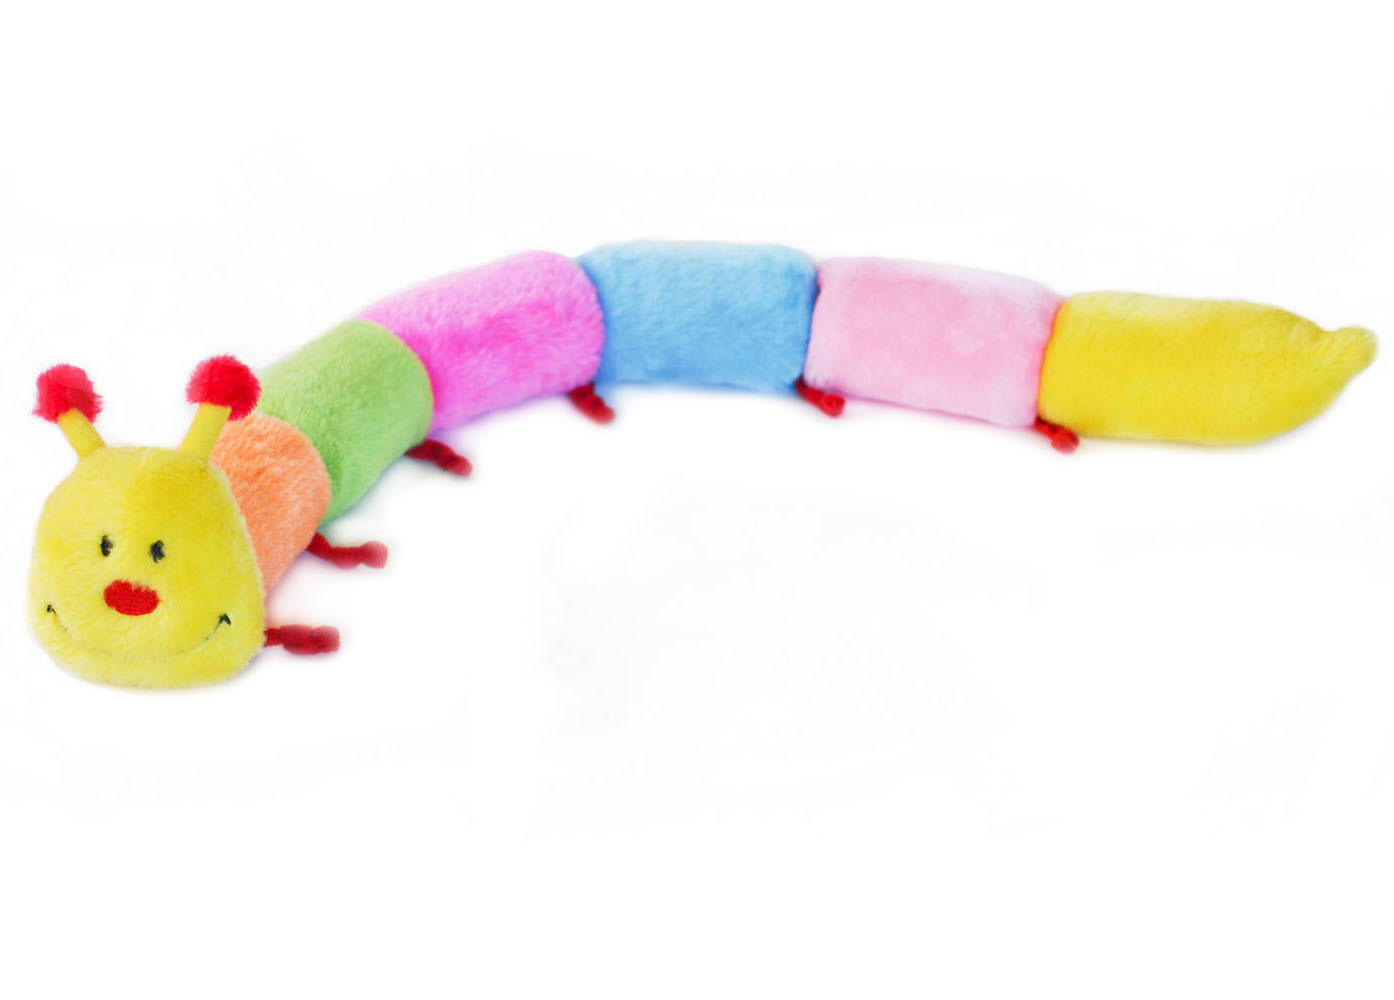 Zippy Paws Long Caterpillar 6 Squeakers Plush No Stuffing Dog Toy image 1